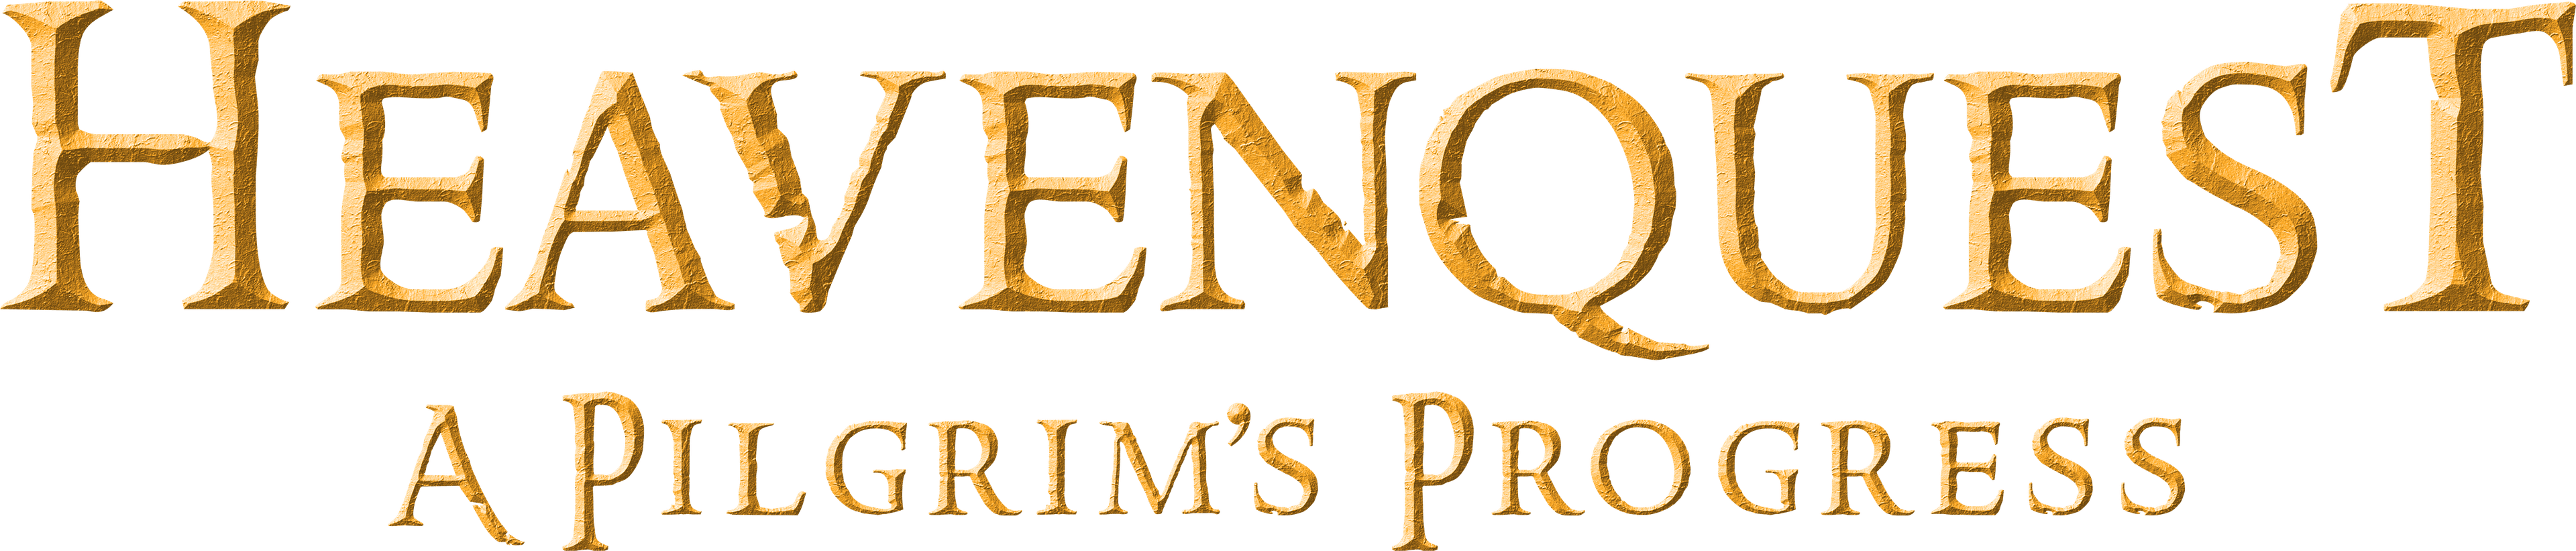 Heavenquest: A Pilgrim's Progress logo